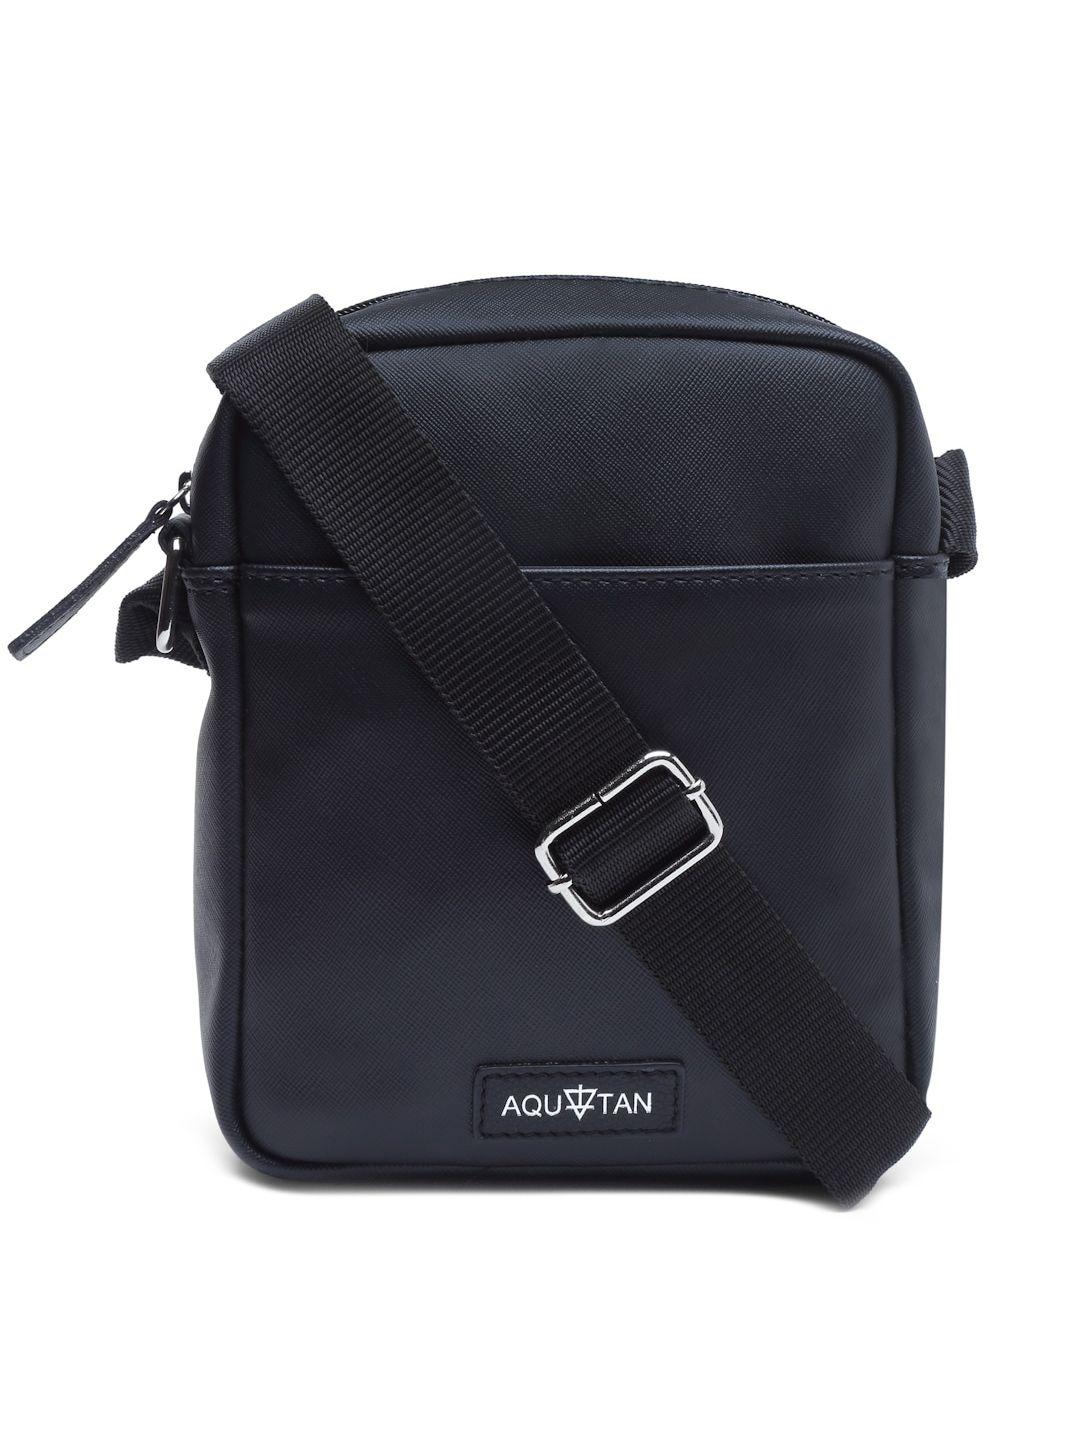 aquatan black pu structured sling bag with tasselled